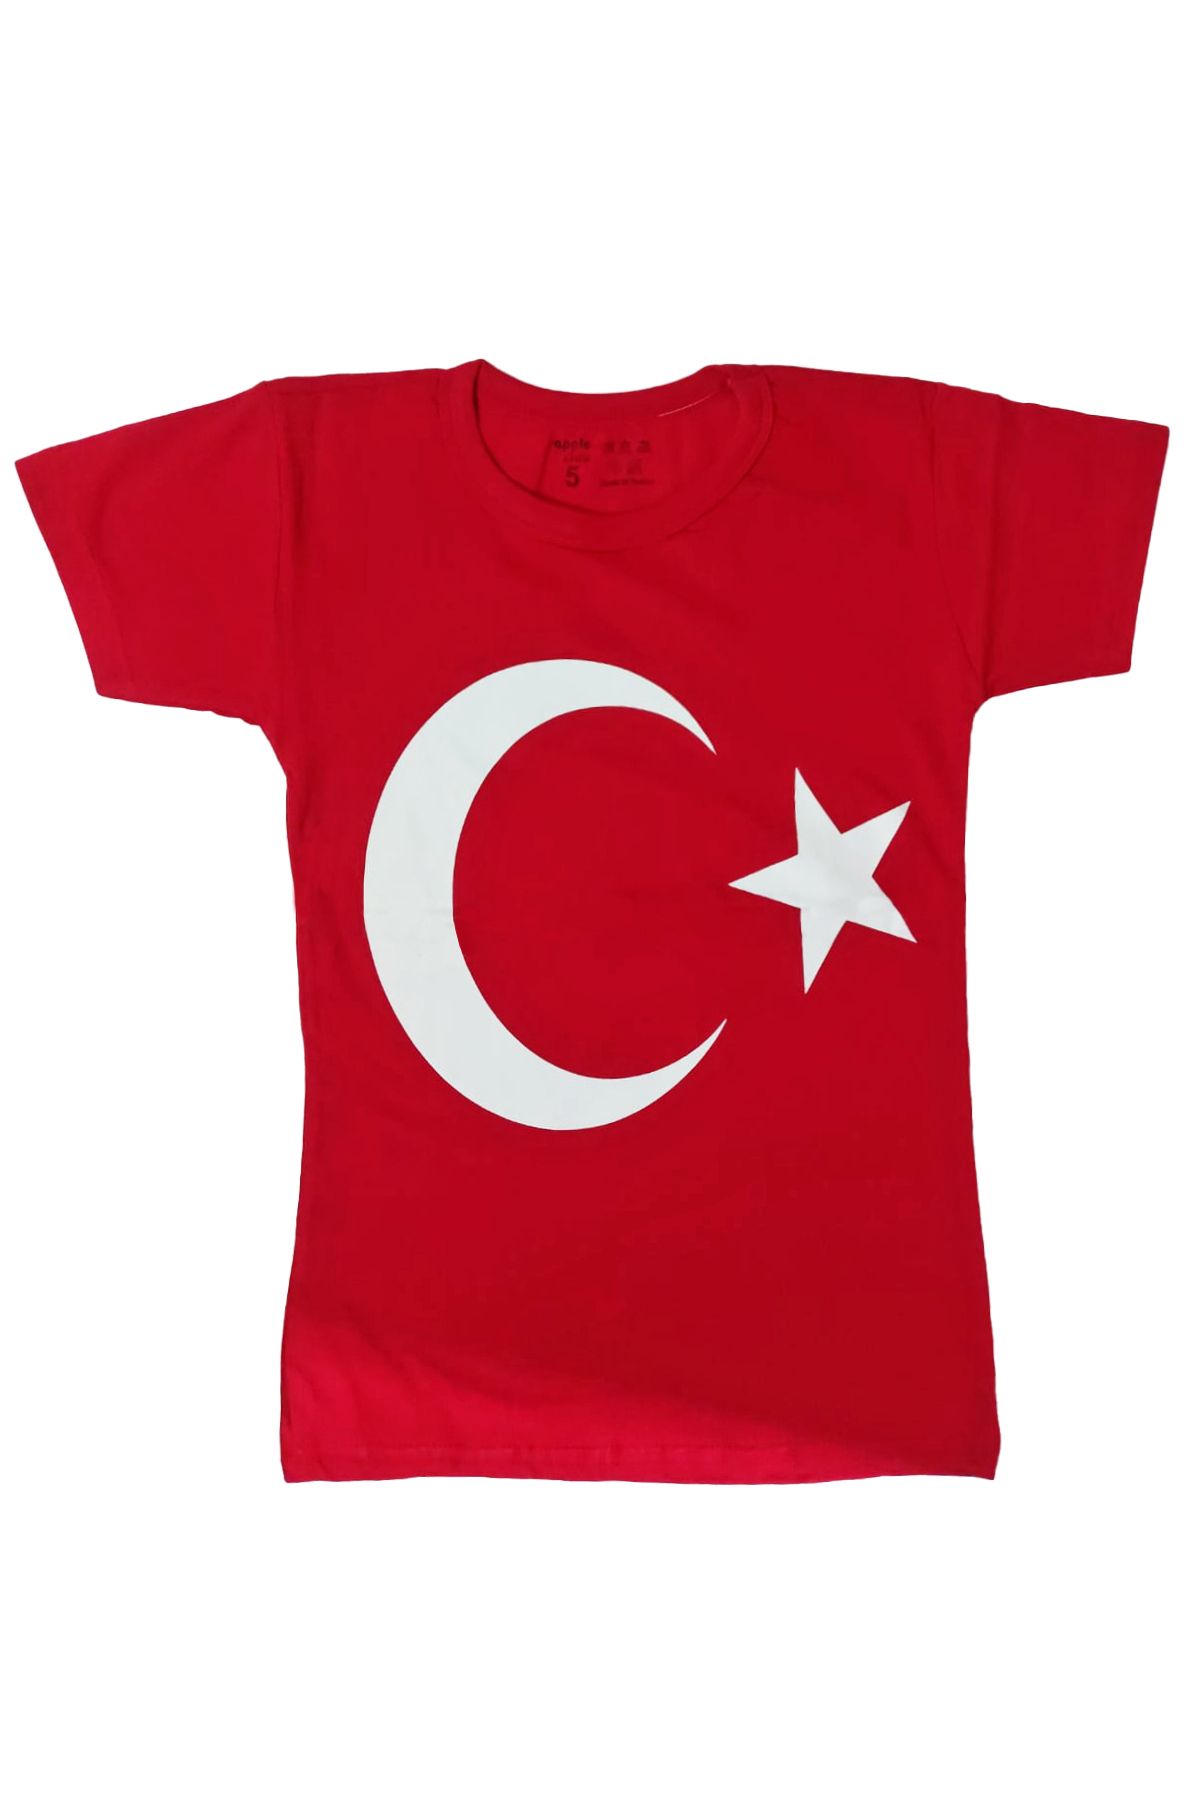 Limmy Türk Bayraklı Tişört Pamuklu Kırmızı Ay Yıldız Çocuk Tshirt- 10 Yaş